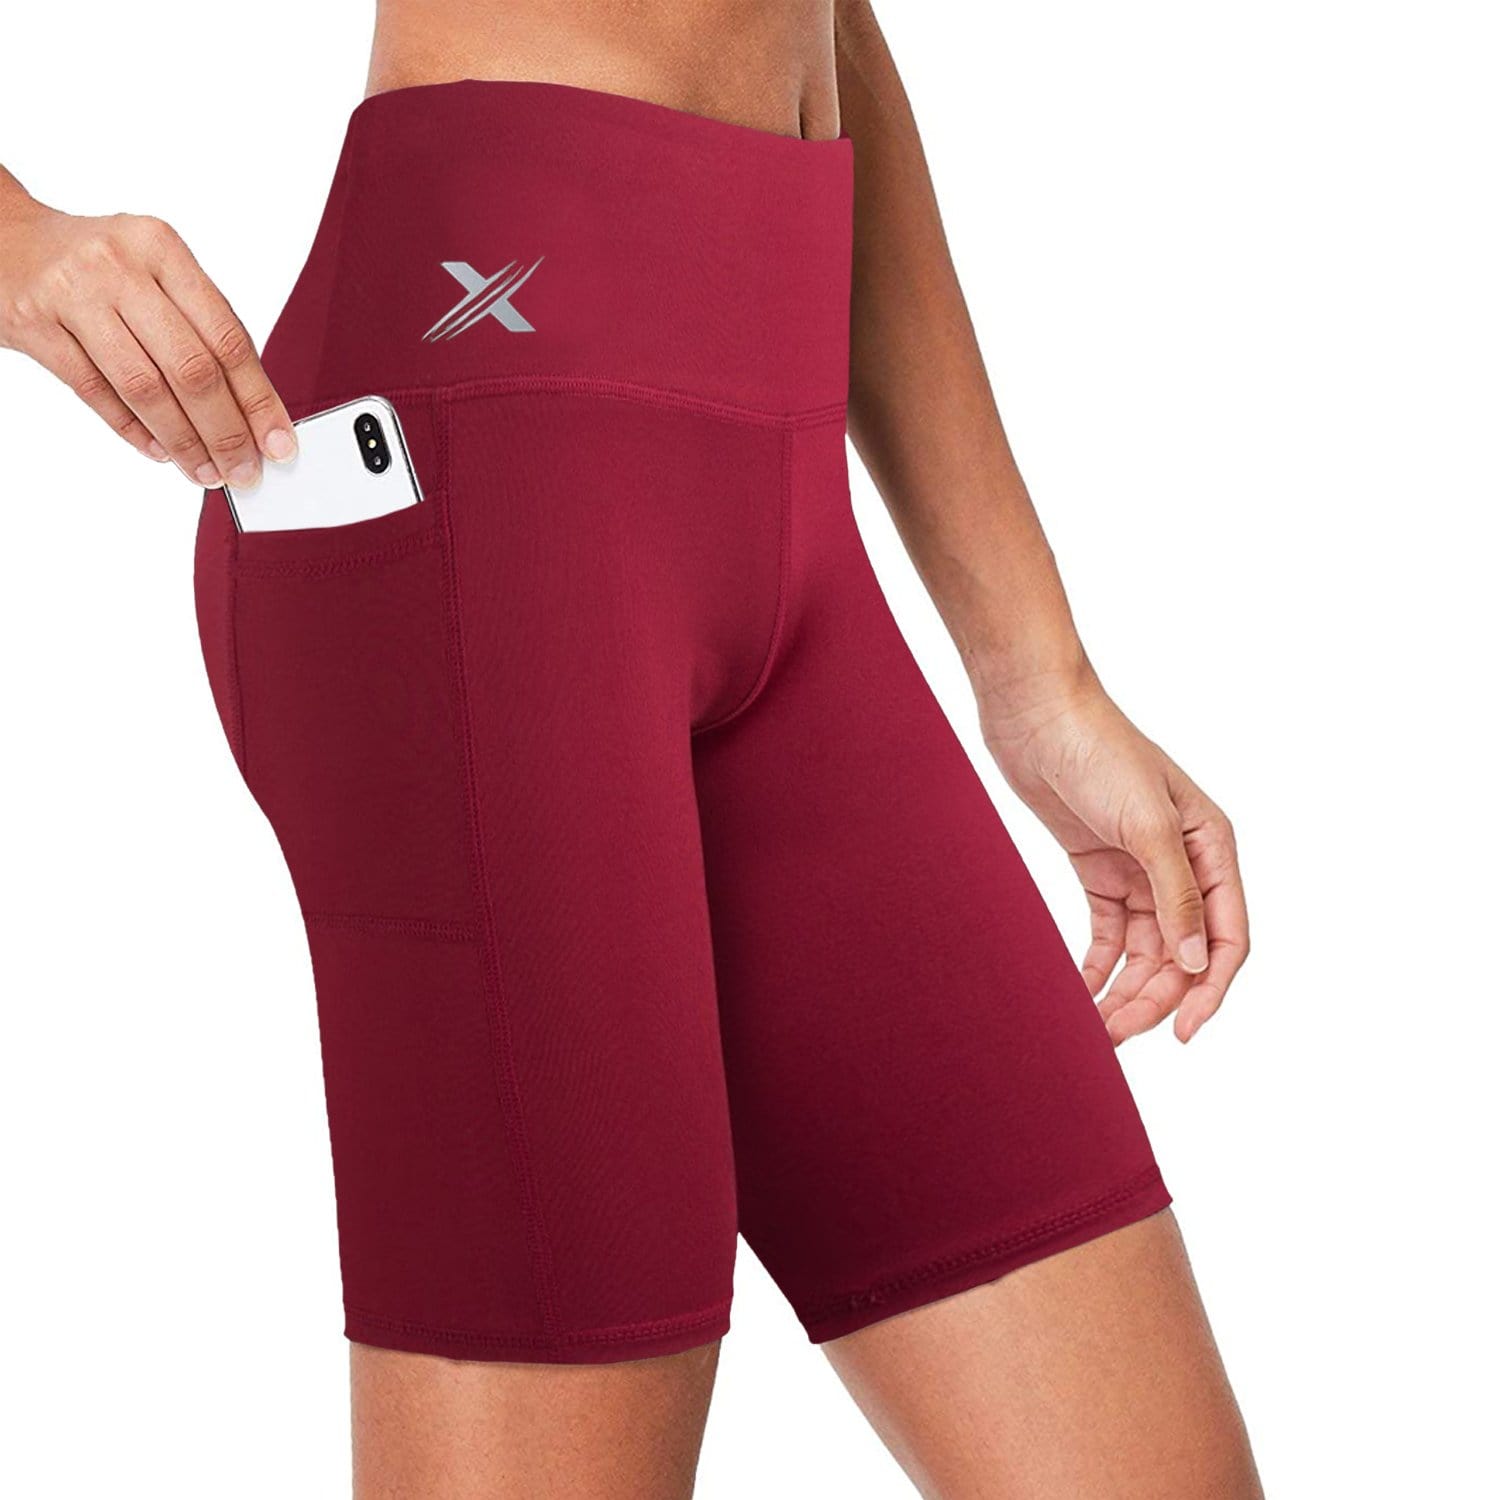 pxiakgy yoga pants women seamless high waist shorts biker shorts